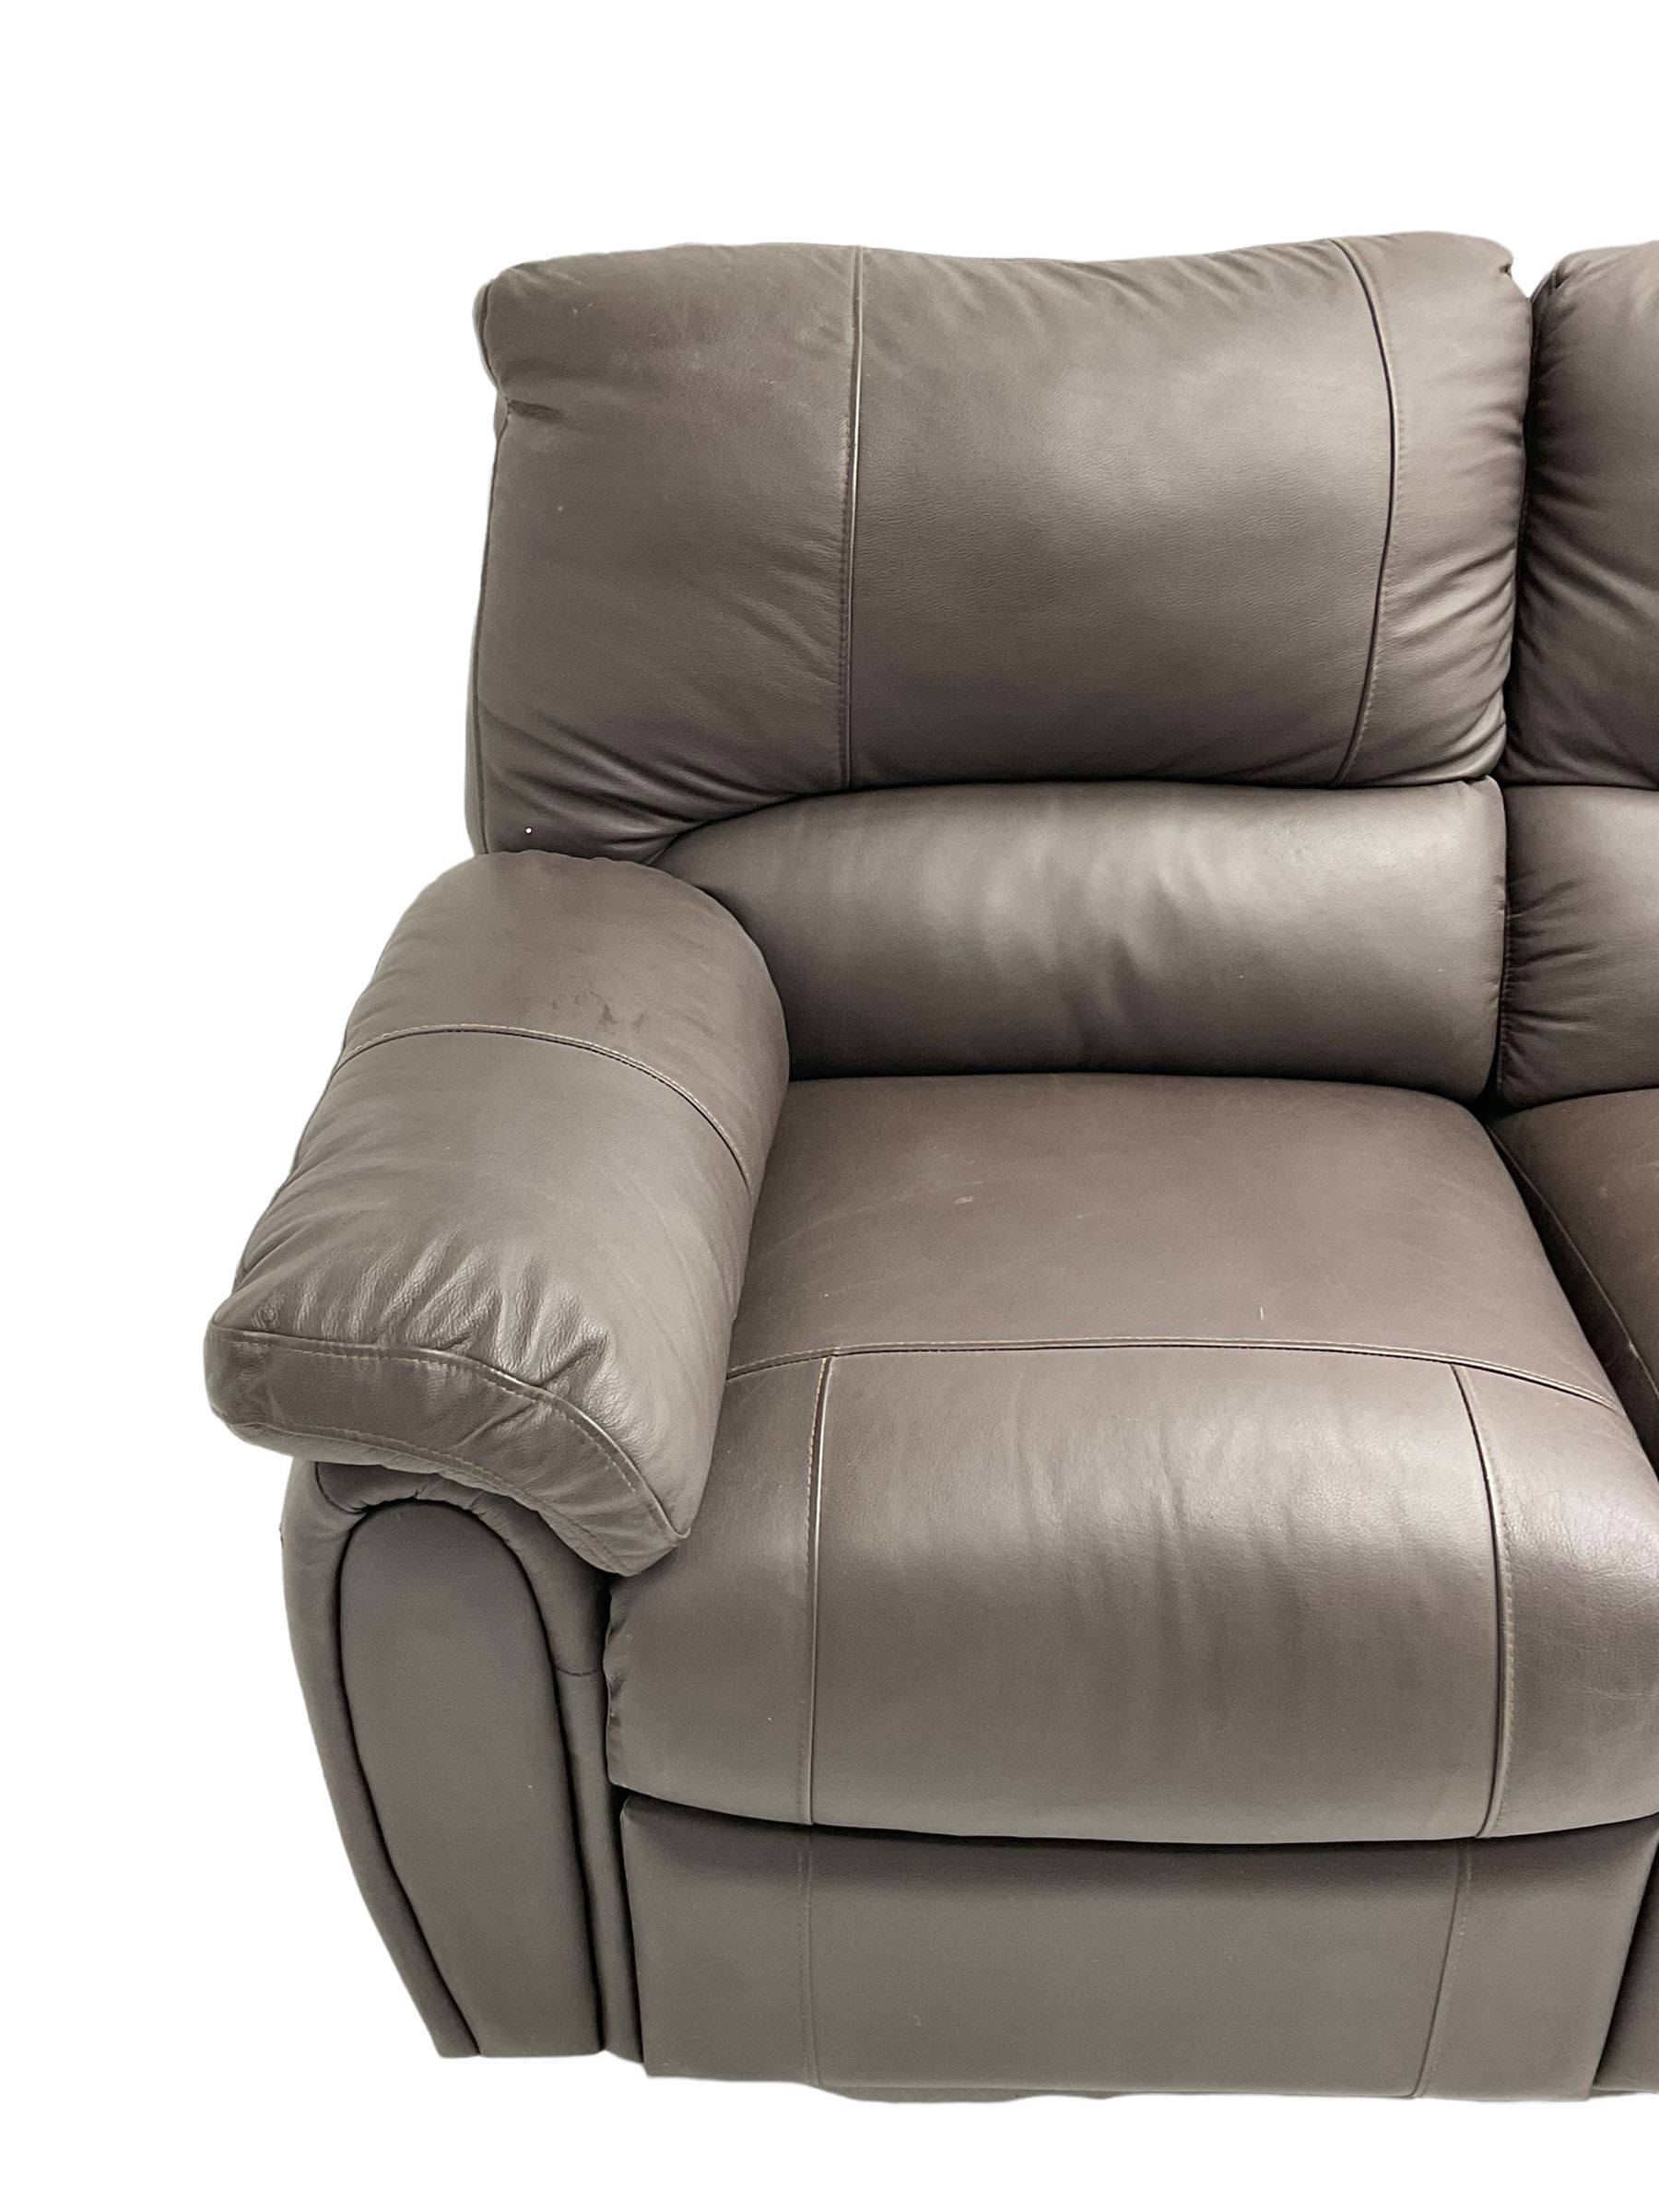 Three seat manual reclining sofa (W200cm) - Image 3 of 6